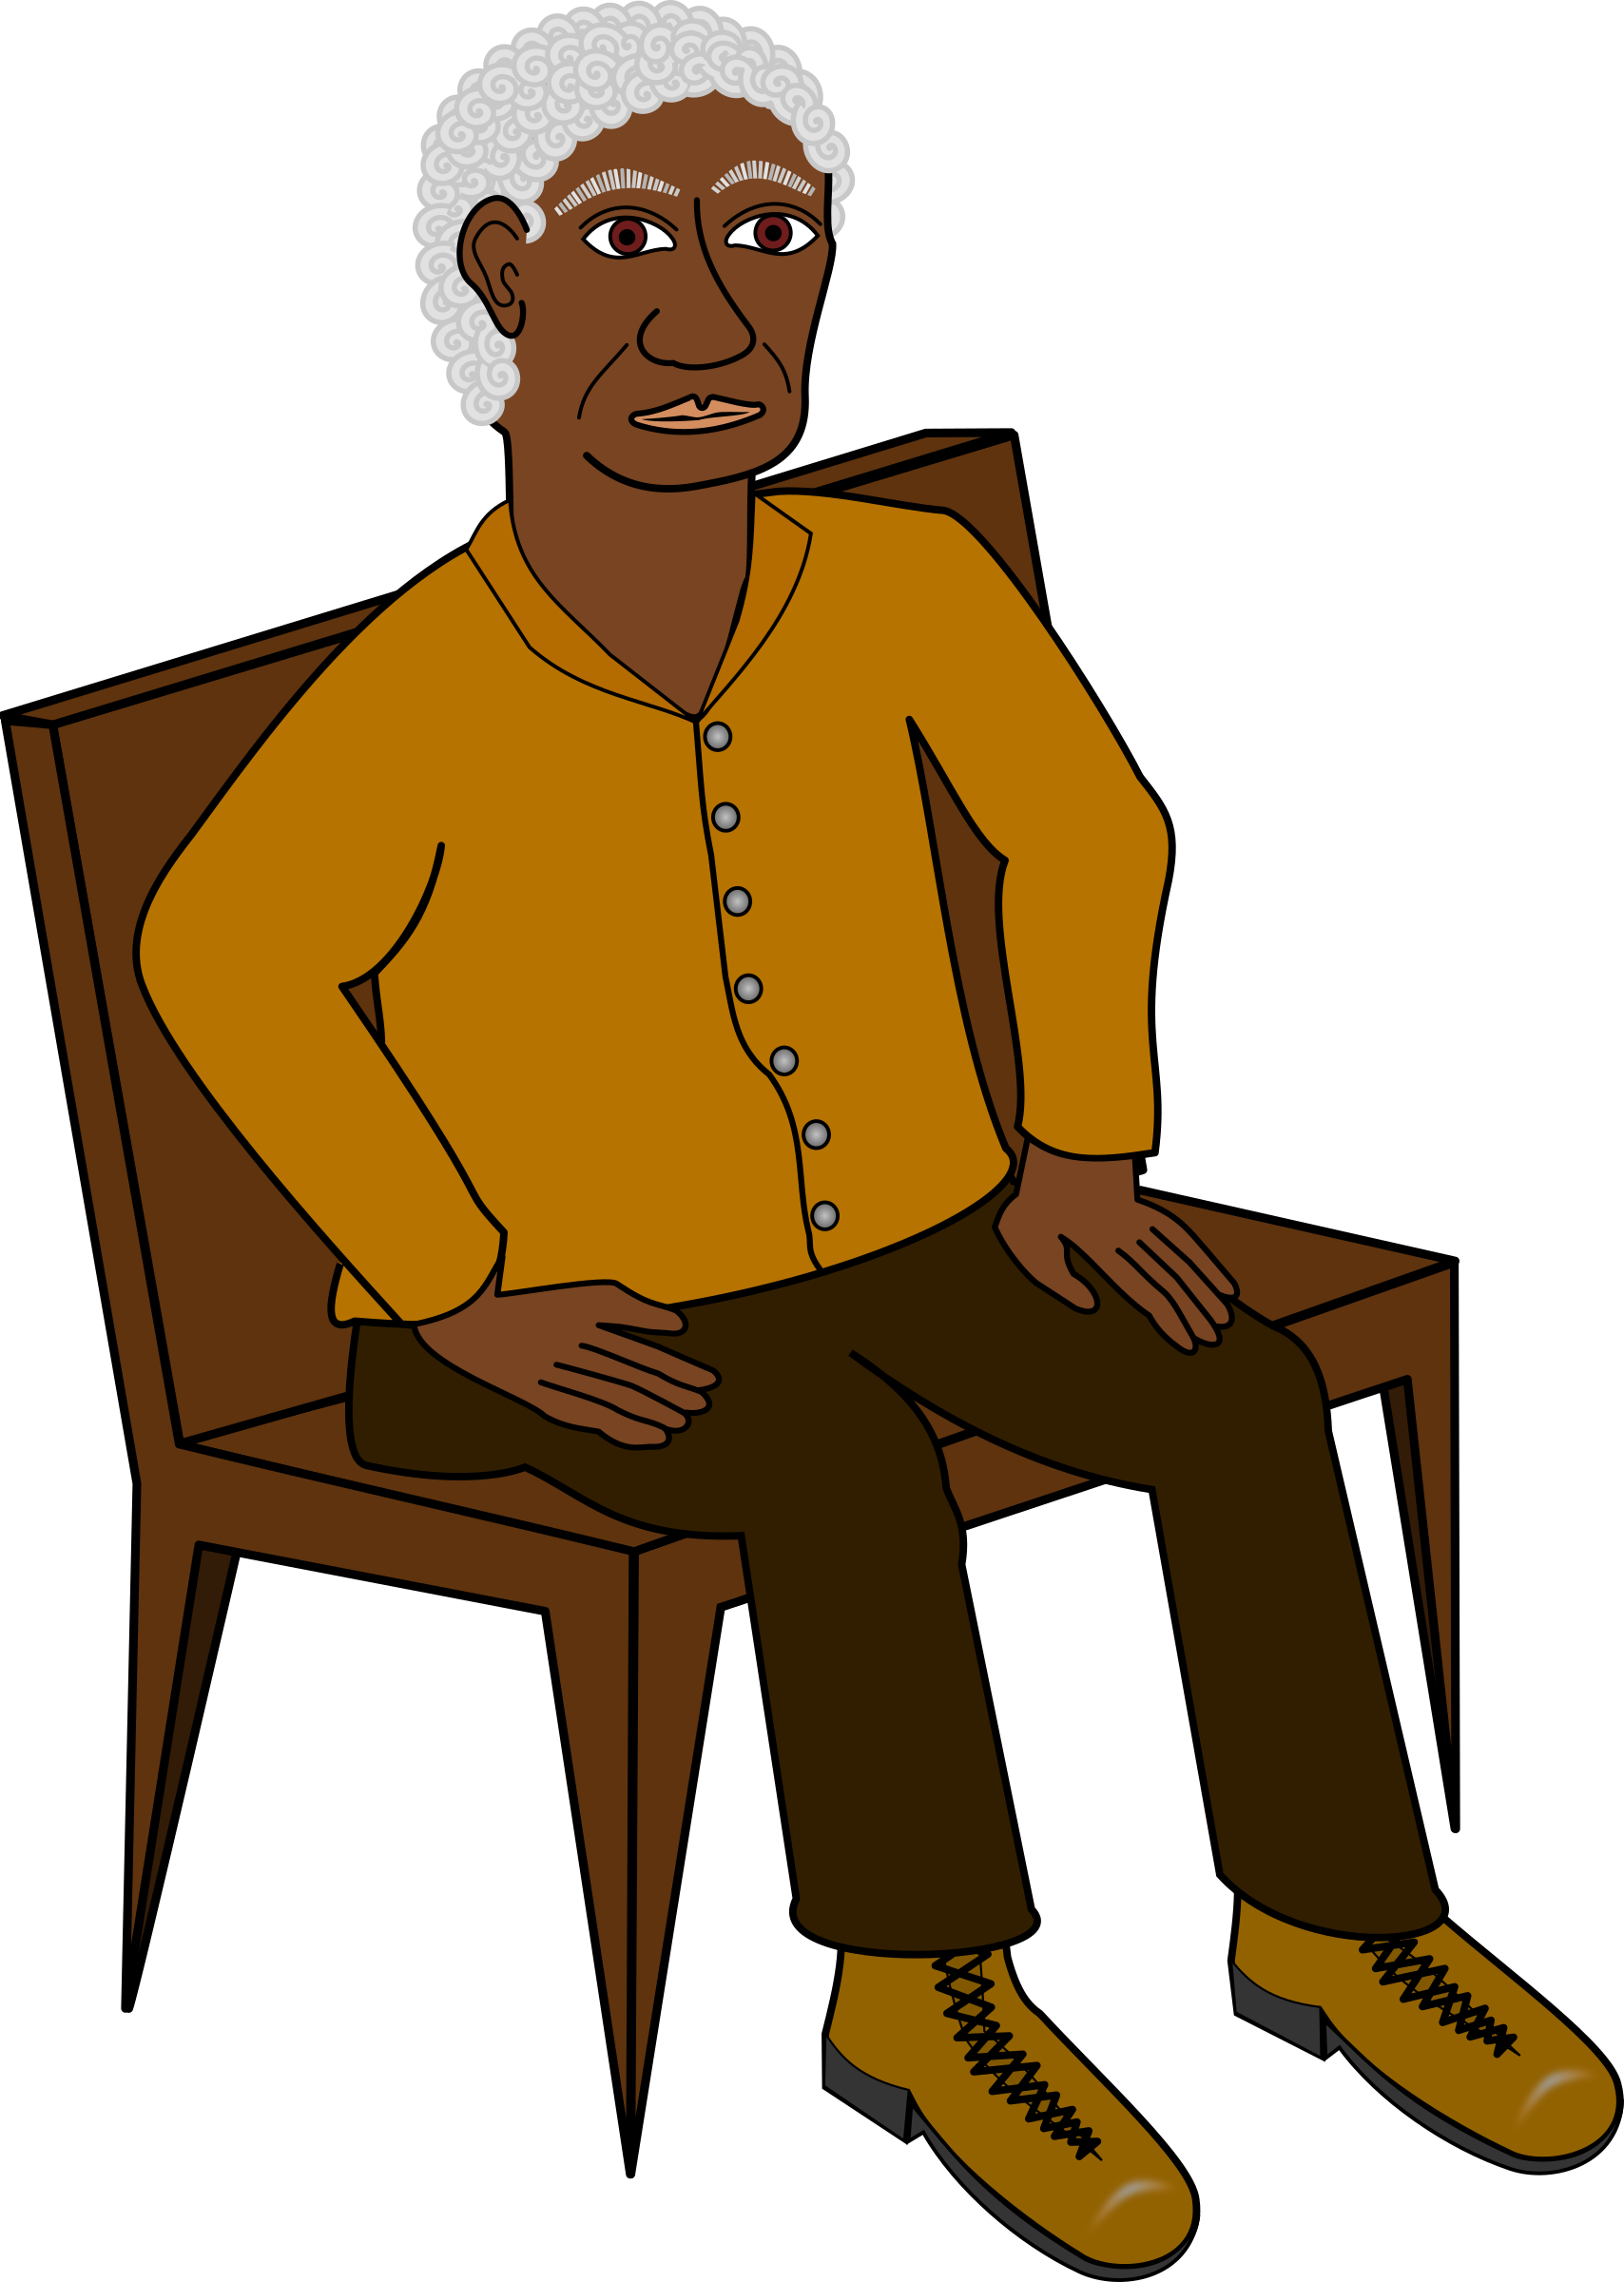 Cartoon Of A Man Sitting On A Chair